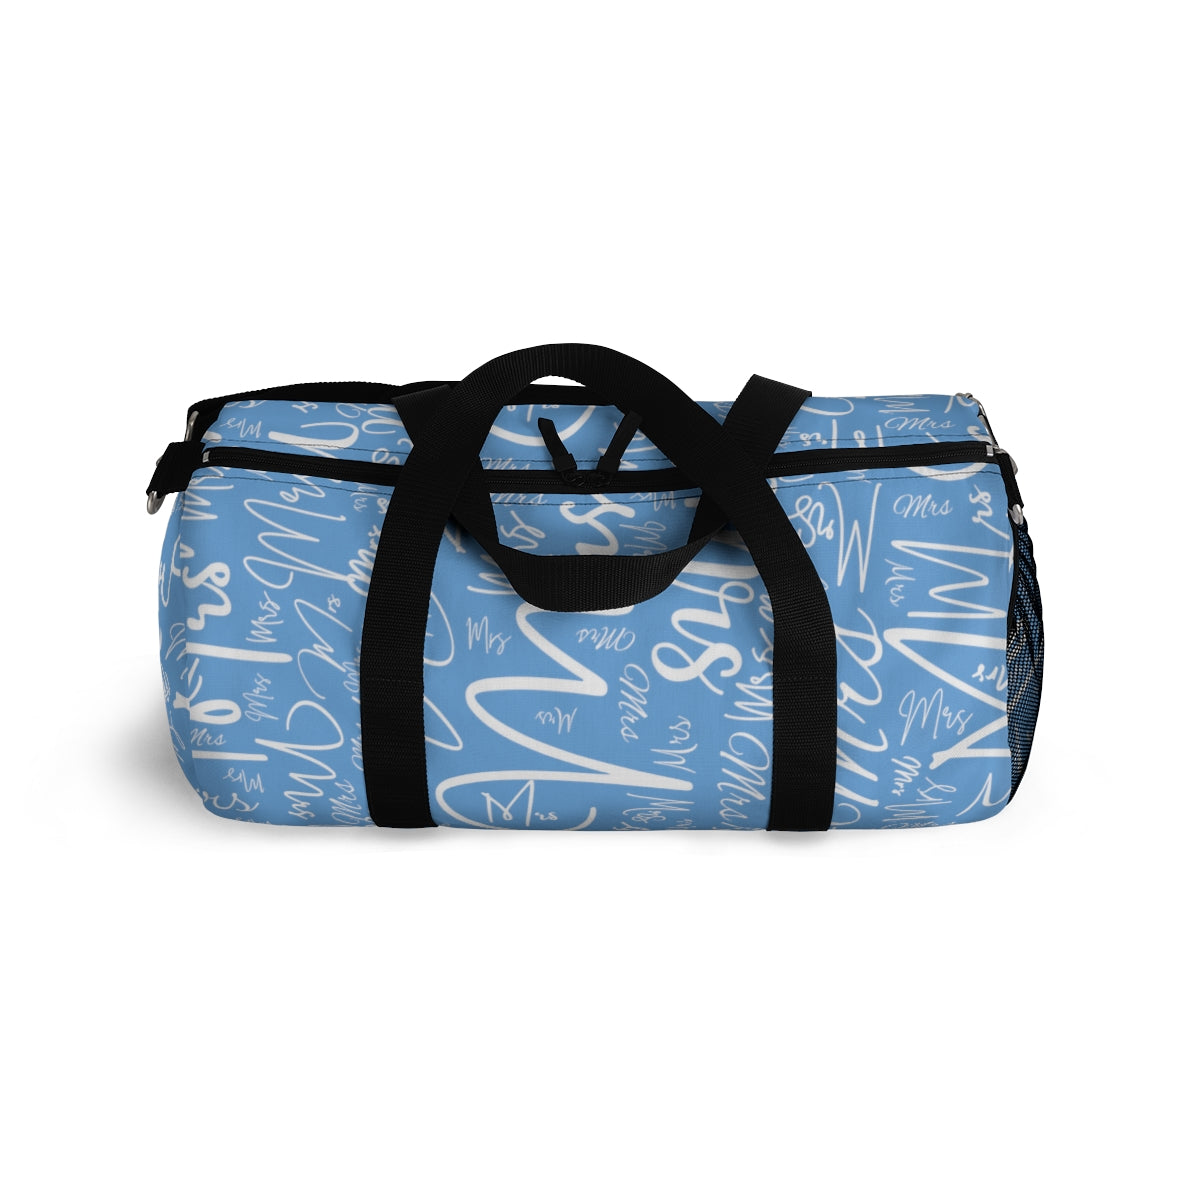 MRS - Duffel Bag